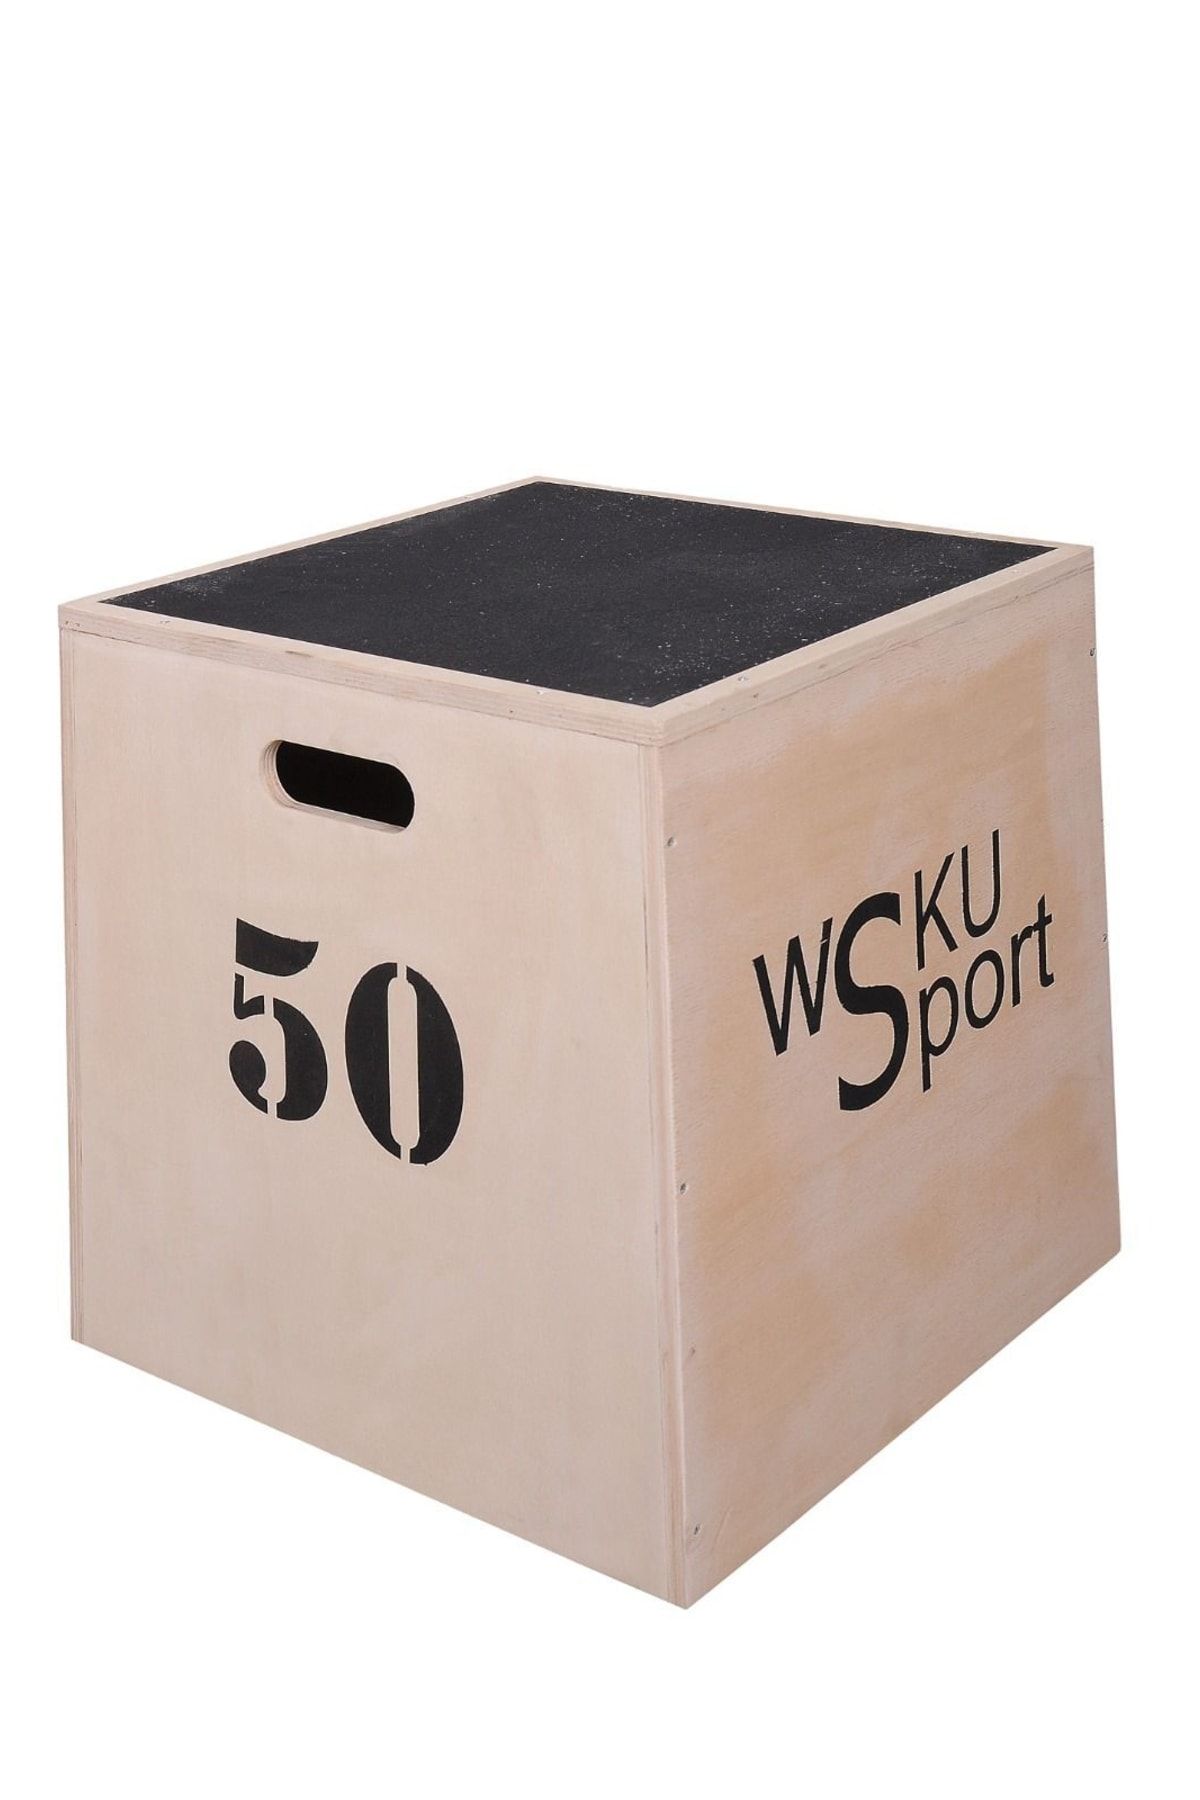 WSKU SPOR Crossfit Box Atlama Kutusu 50 Cm